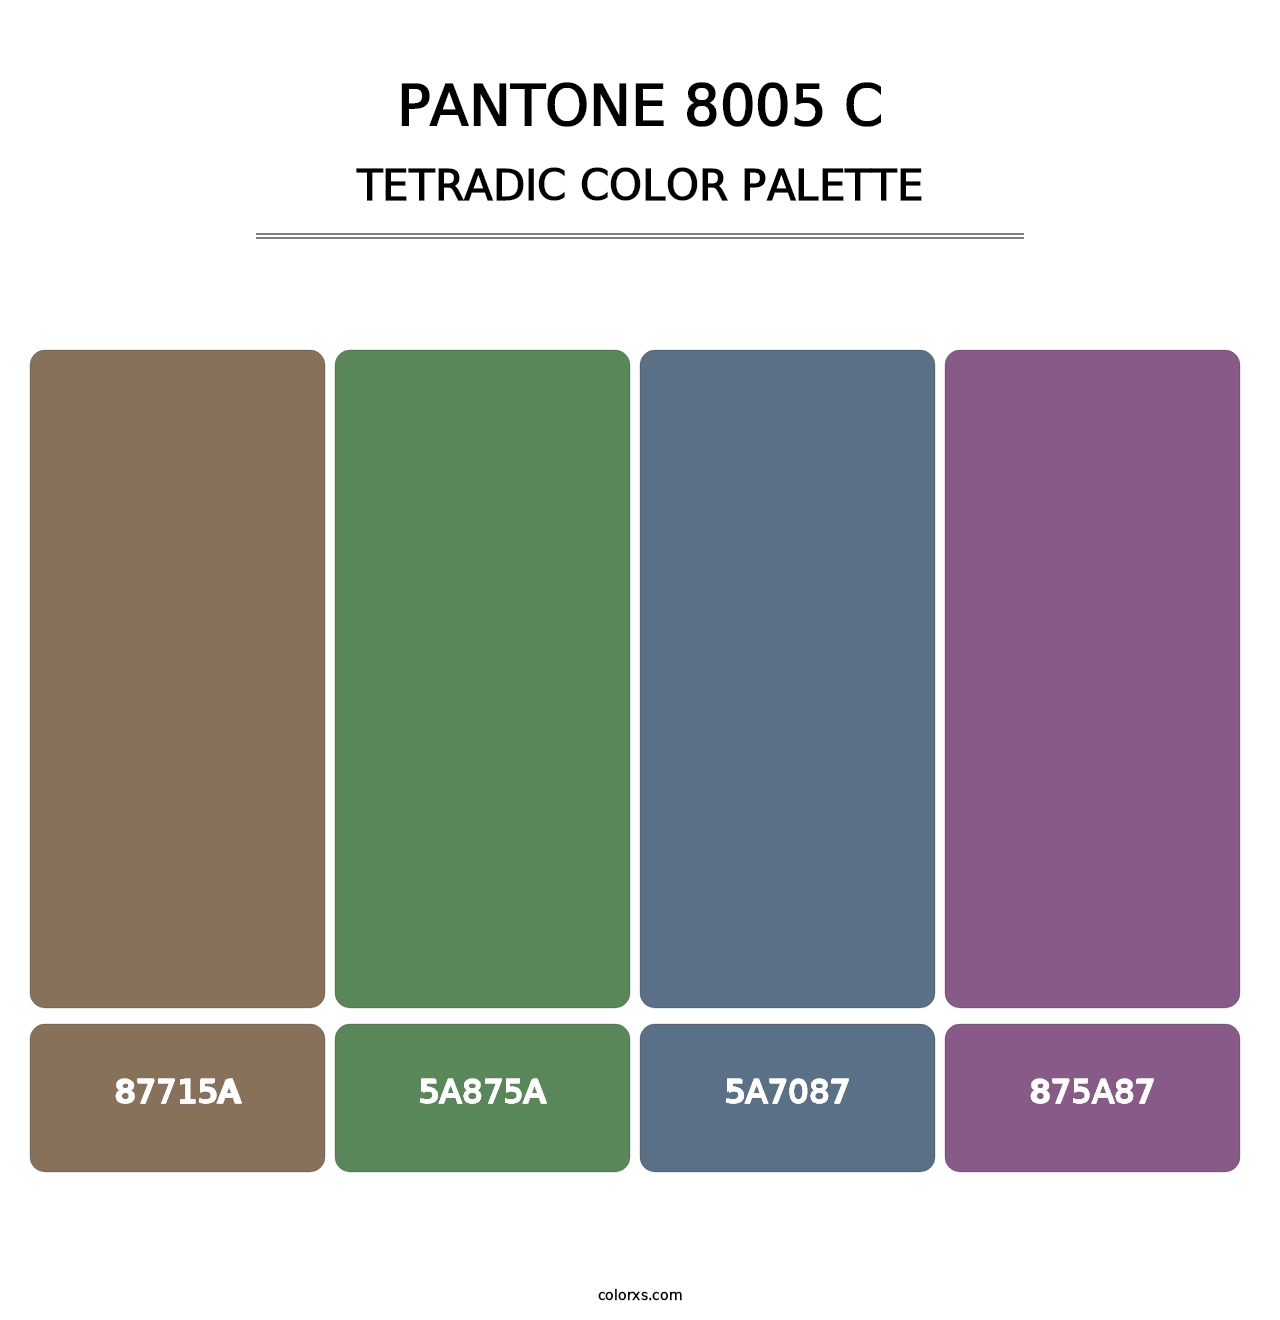 PANTONE 8005 C - Tetradic Color Palette